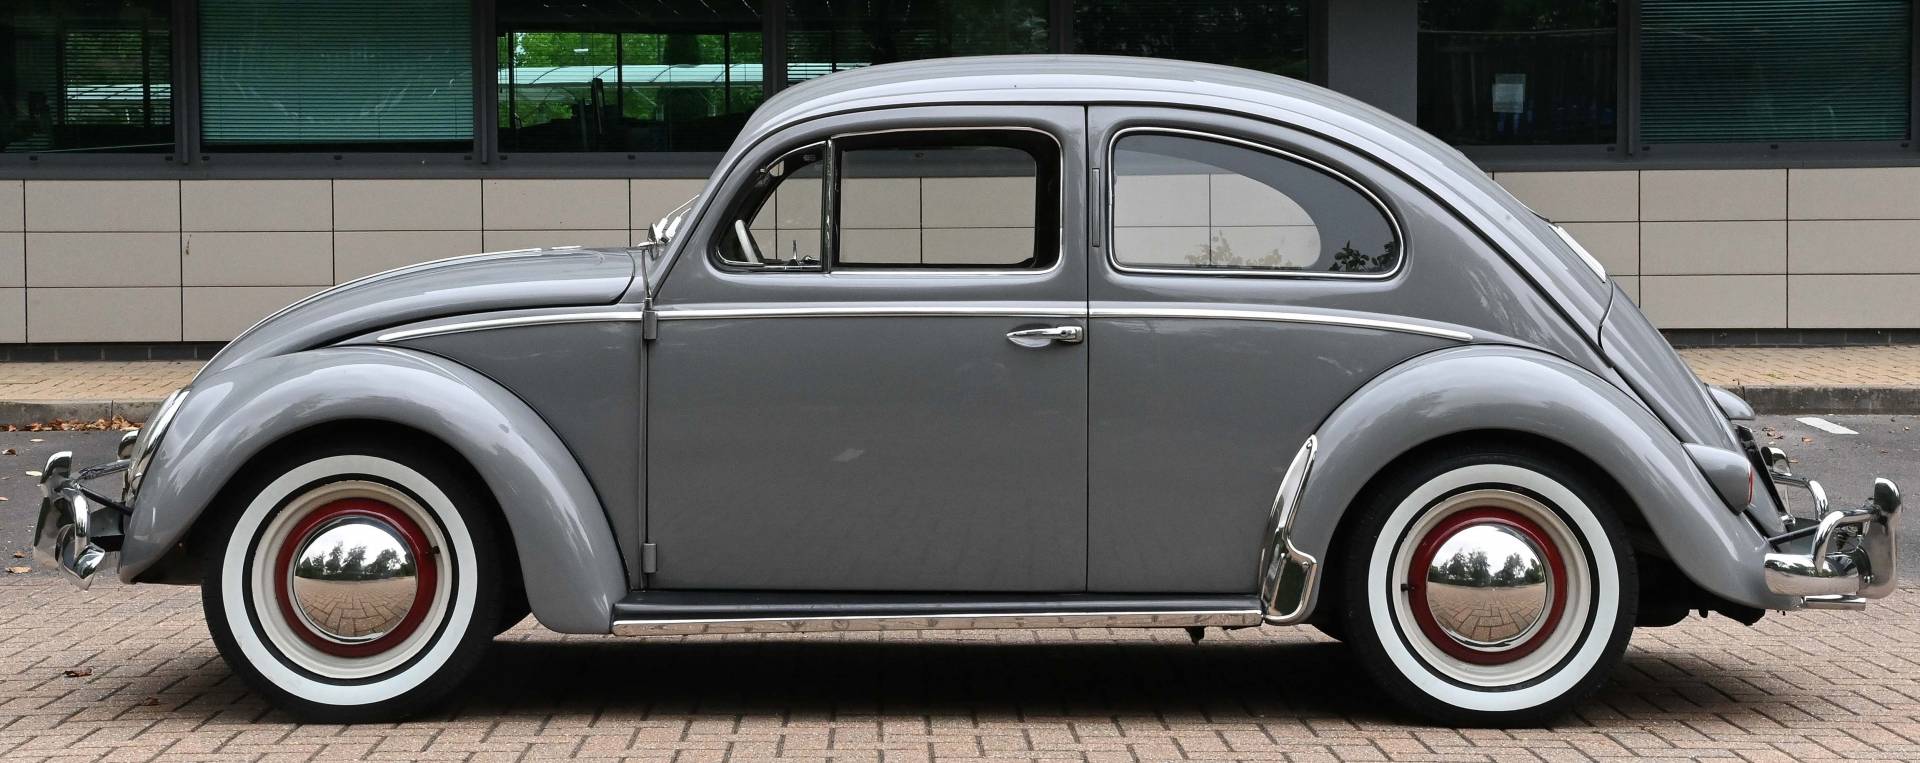 For Sale: Volkswagen Beetle 1200 Standard "Oval" (1956 ...